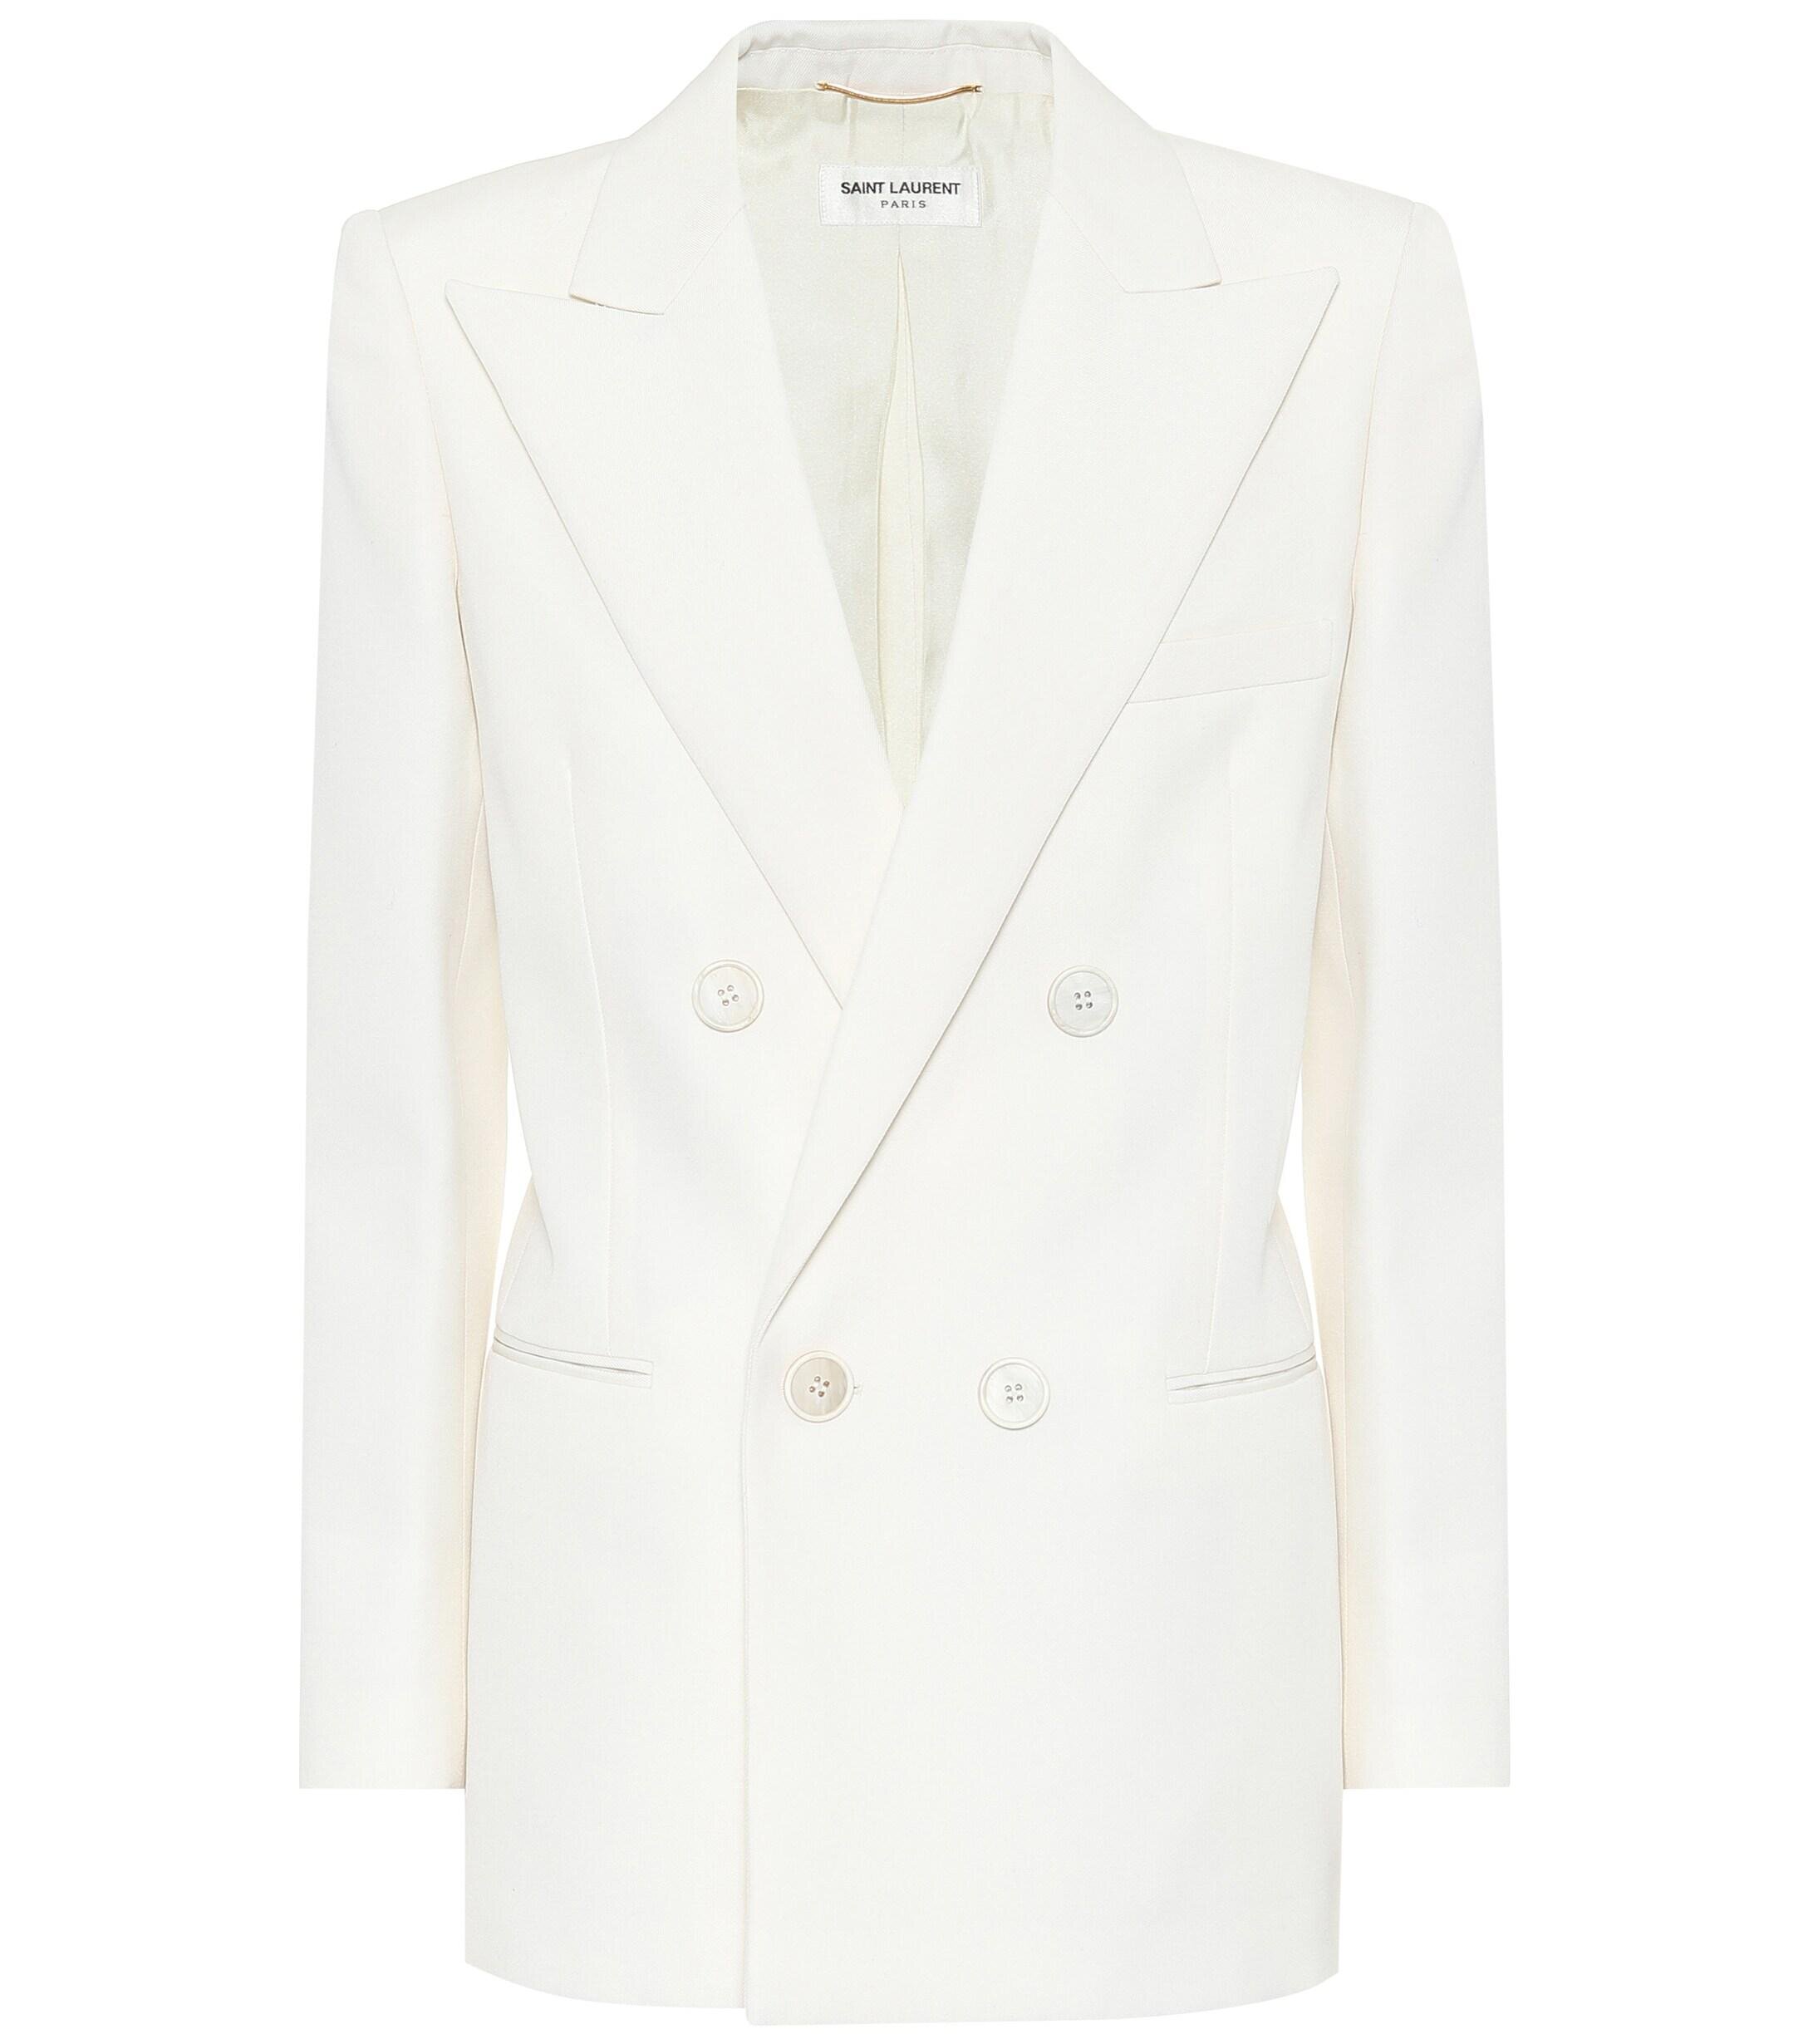 Saint Laurent Double-Breasted Wool-Twill Blazer in White.jpg